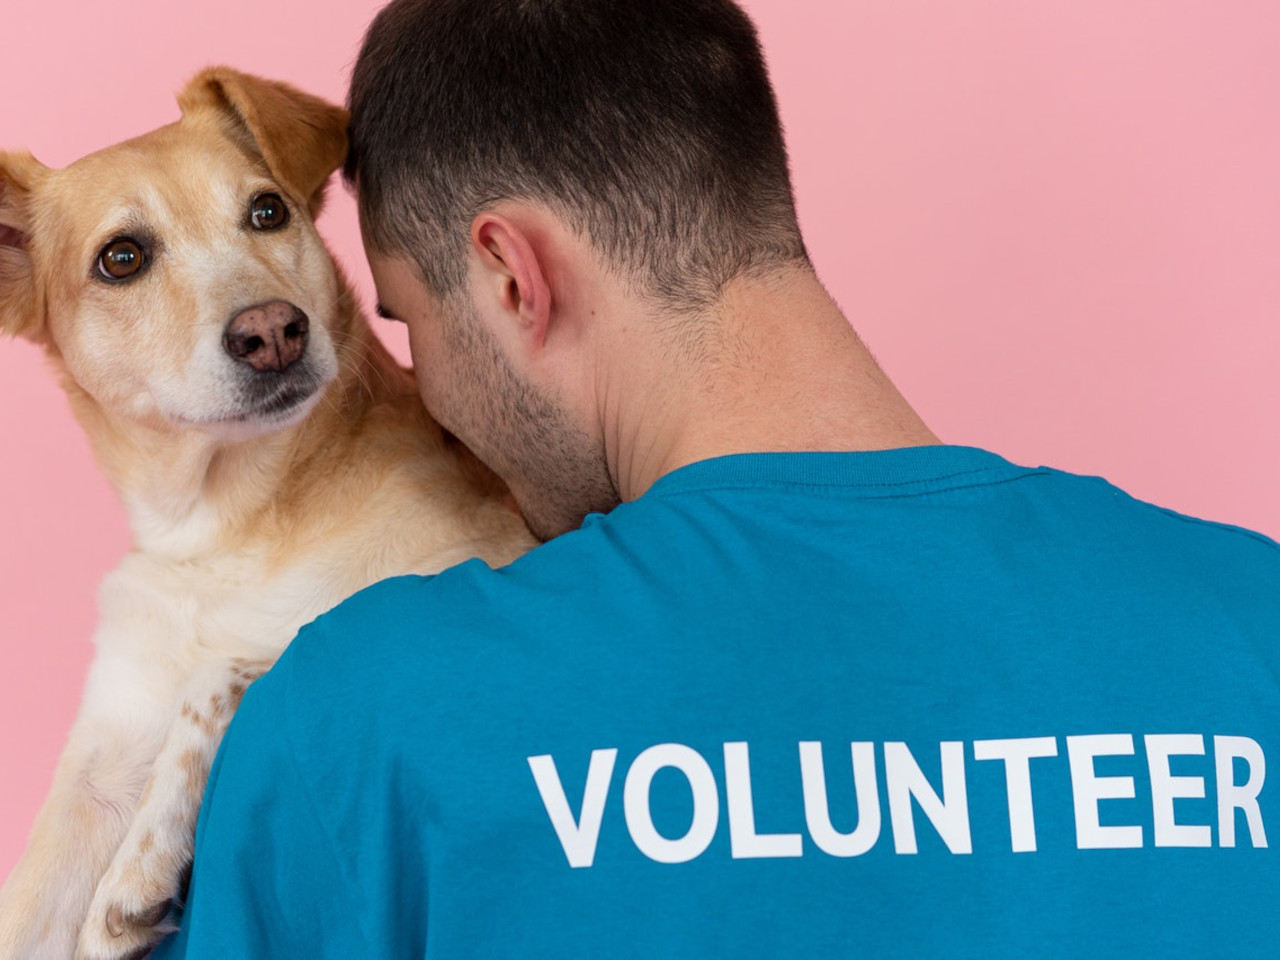 Man facing away, volunteering and holding dog